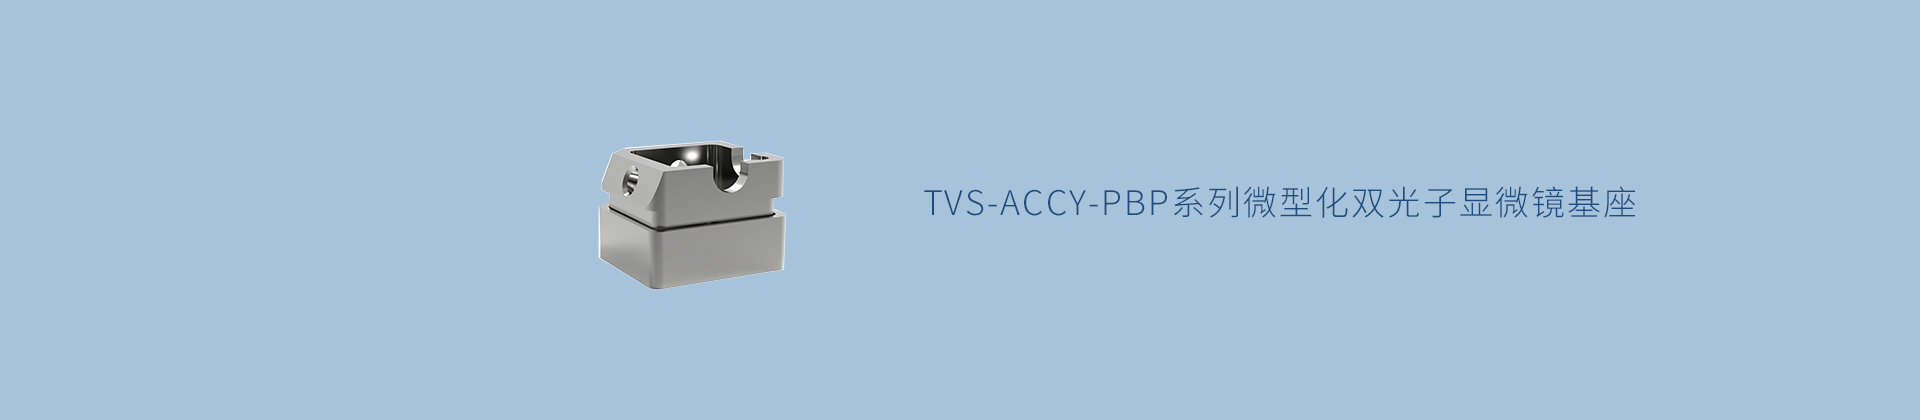 TVS-ACCY-PBP系列微型化双光子显微镜基座